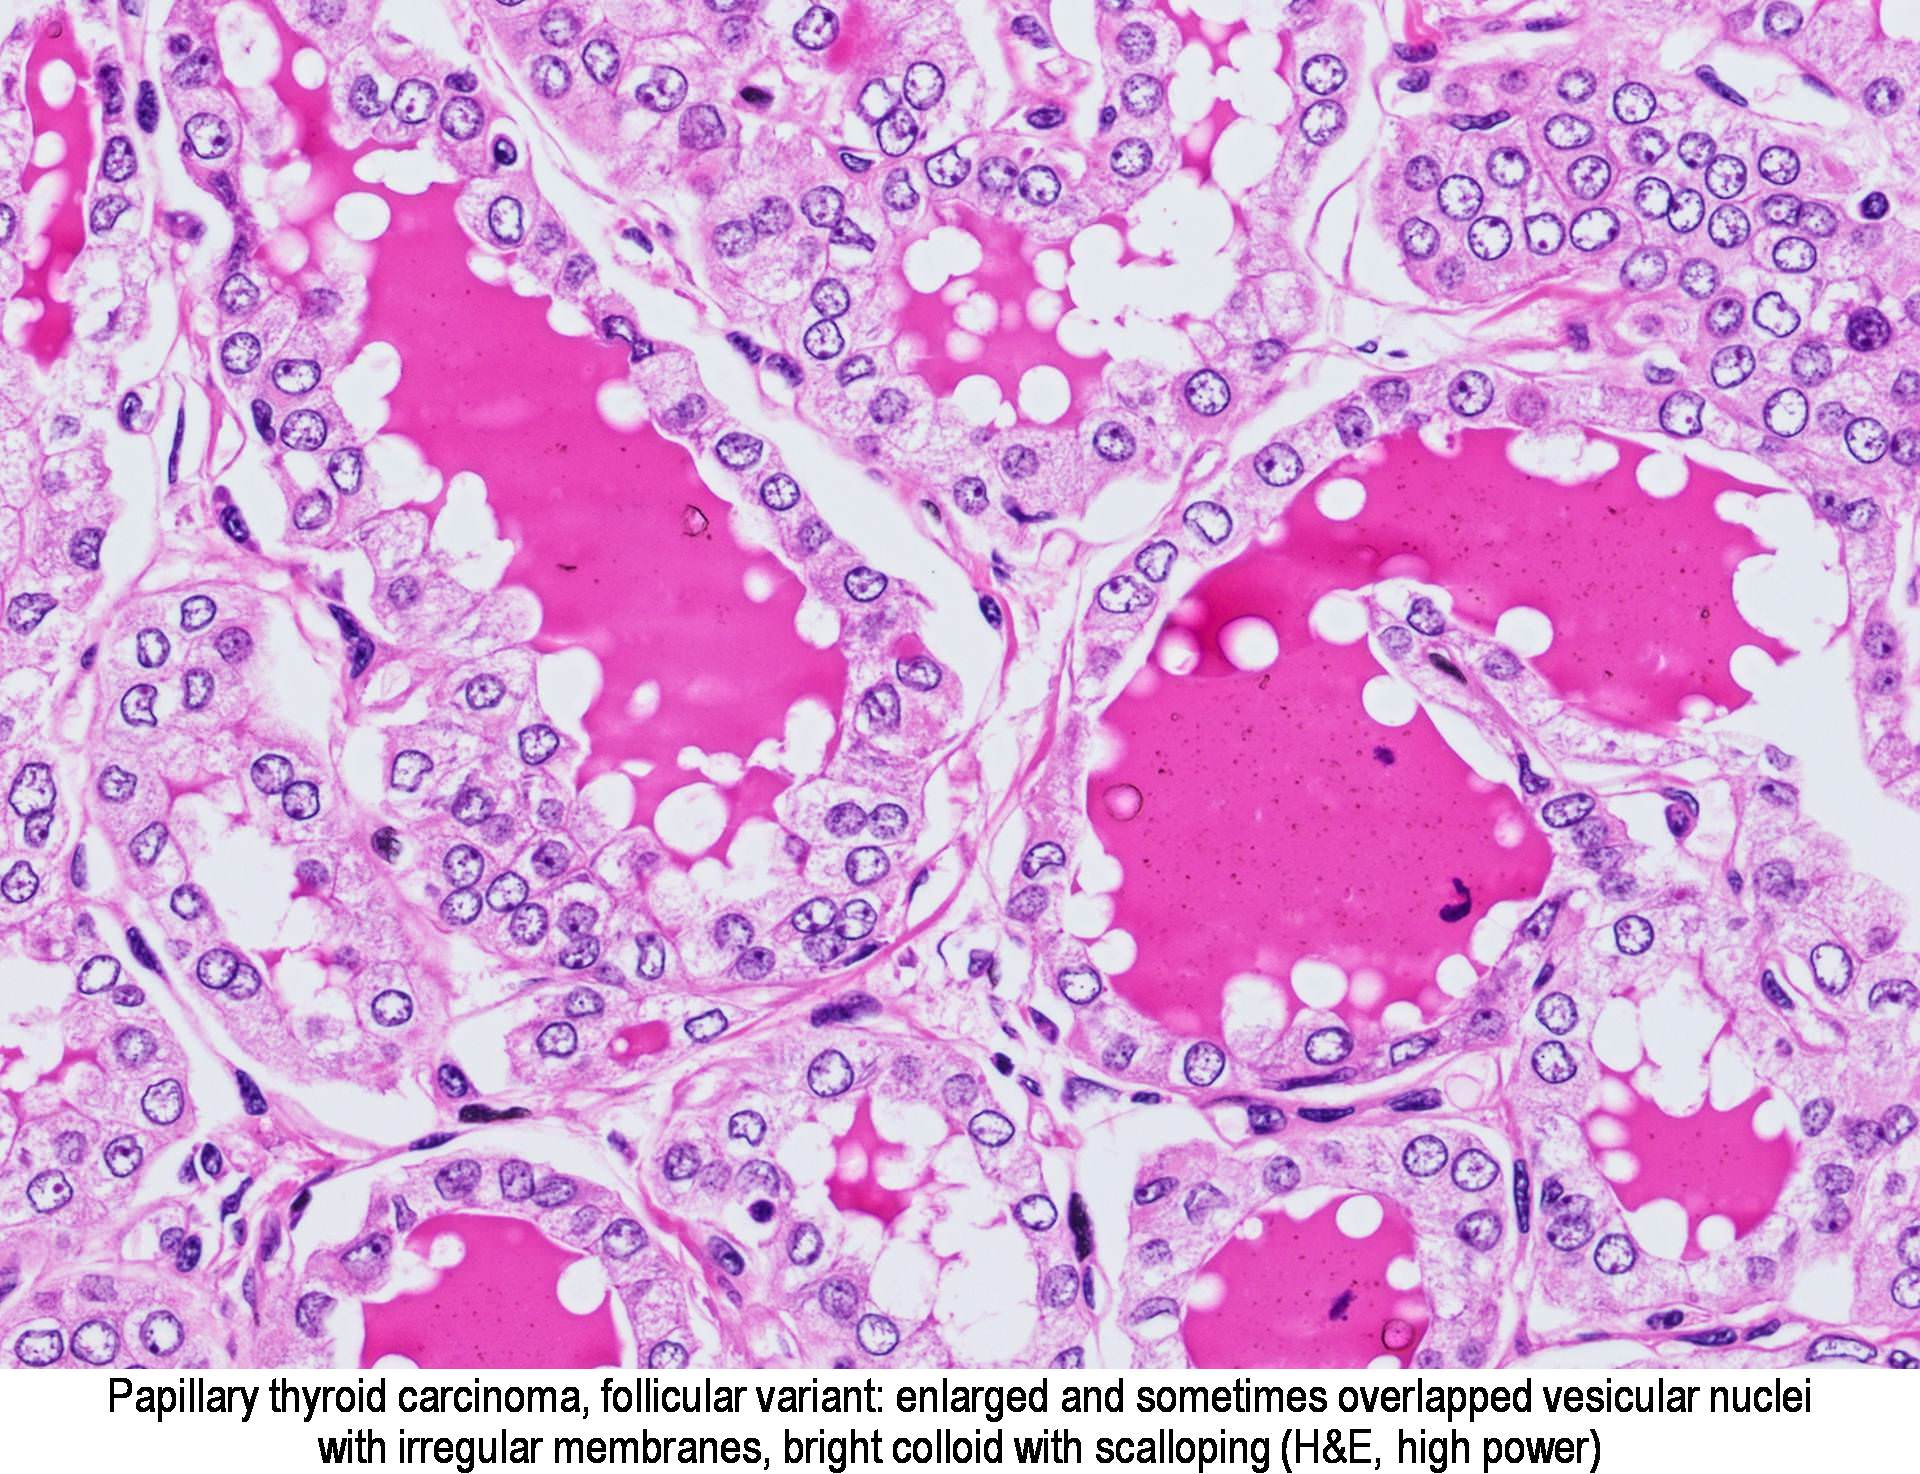 Pathology Outlines - Papillary carcinoma - follicular variant
